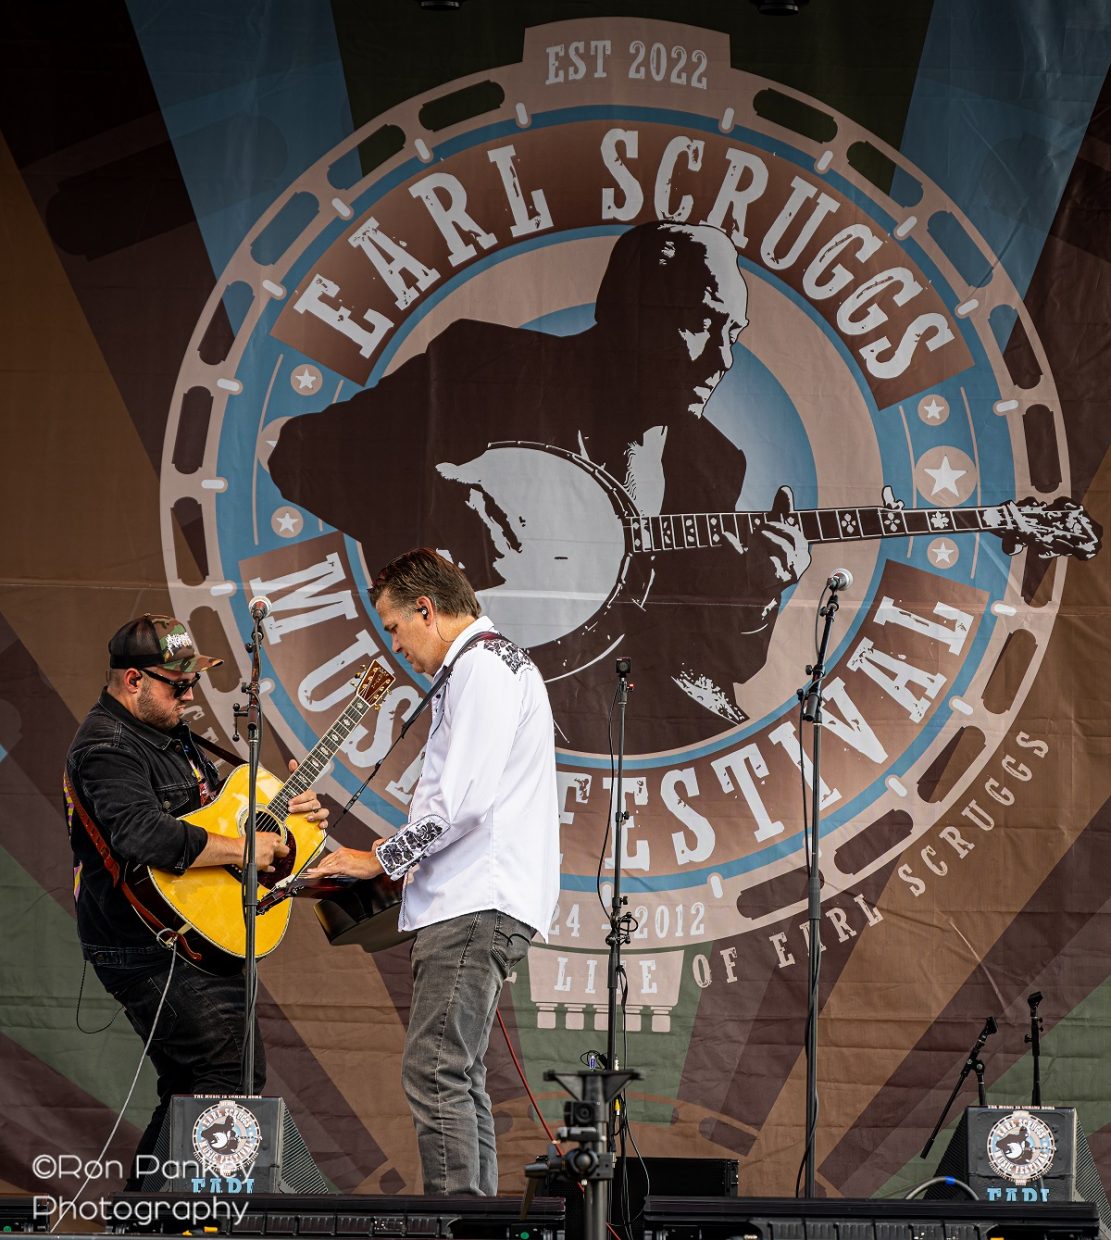 Photos: Sam Bush, Béla Fleck, and More Perform at Earl Scruggs Music Festival